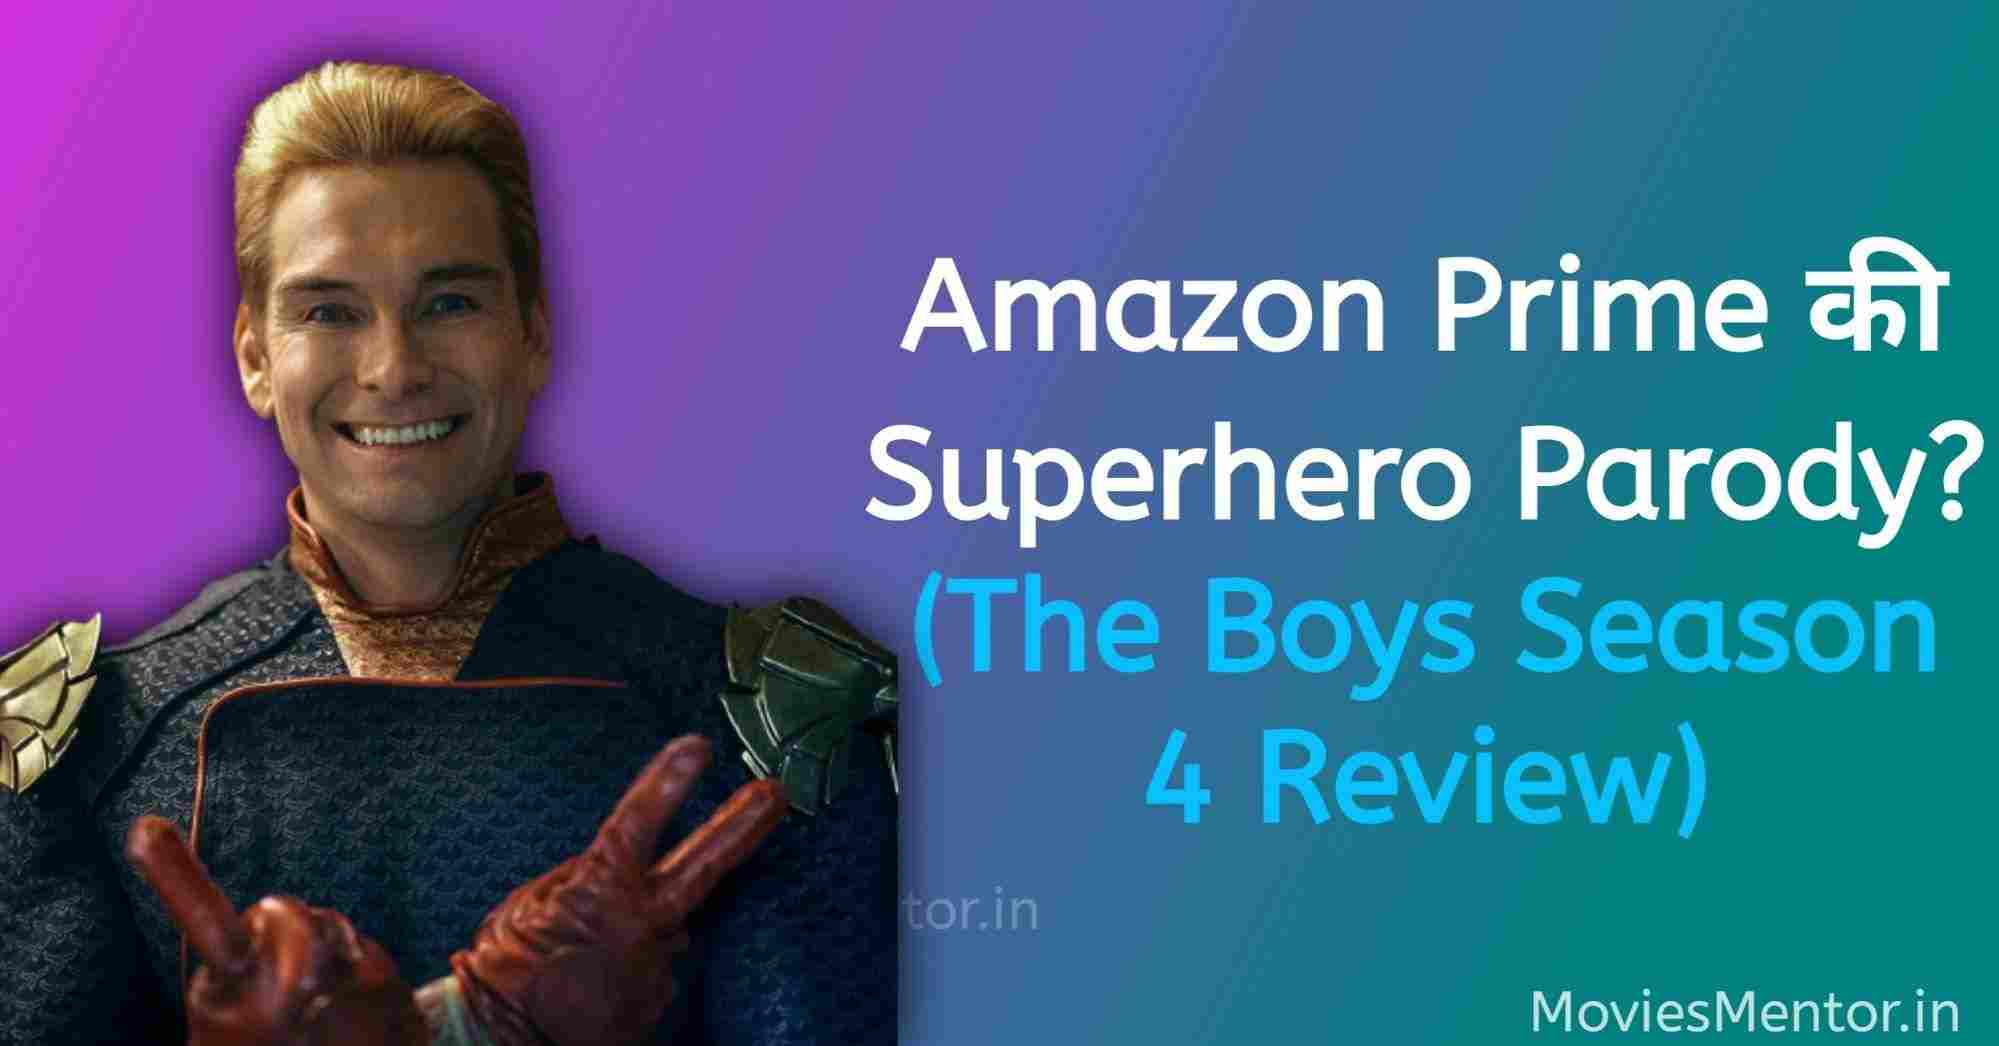 The Boys Season 3 Review